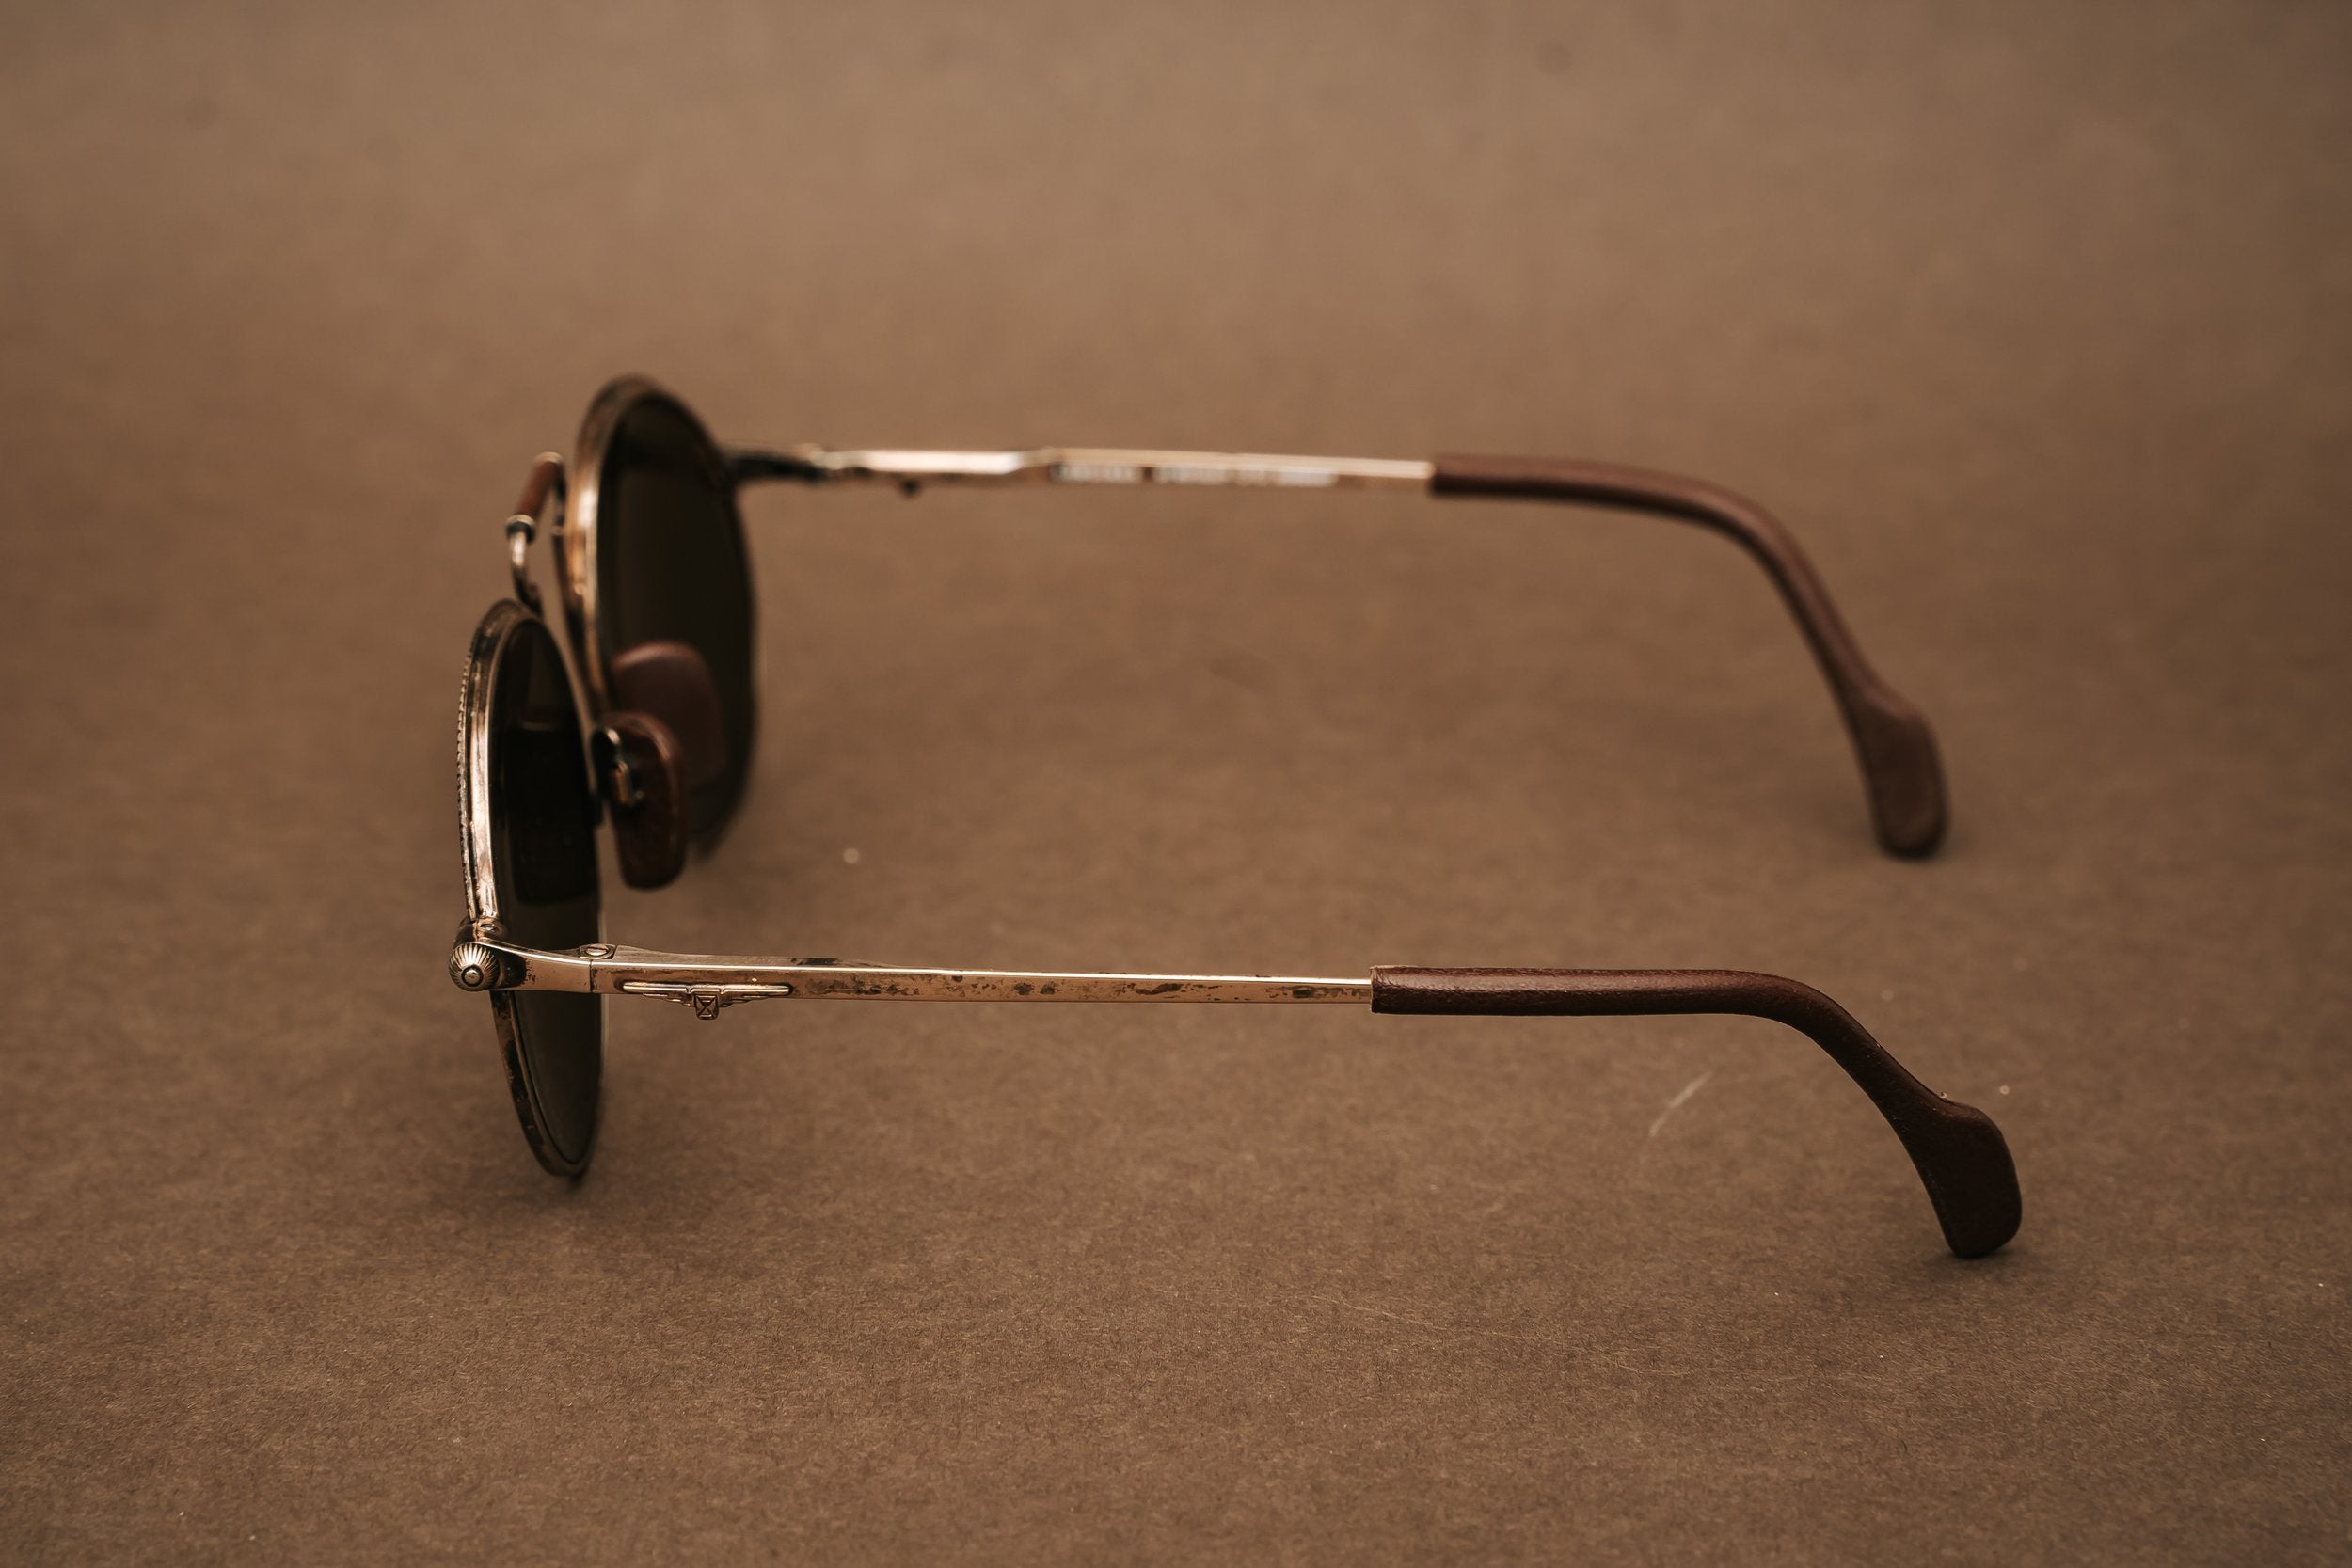 Longines 0169 by Metzler sunglasses